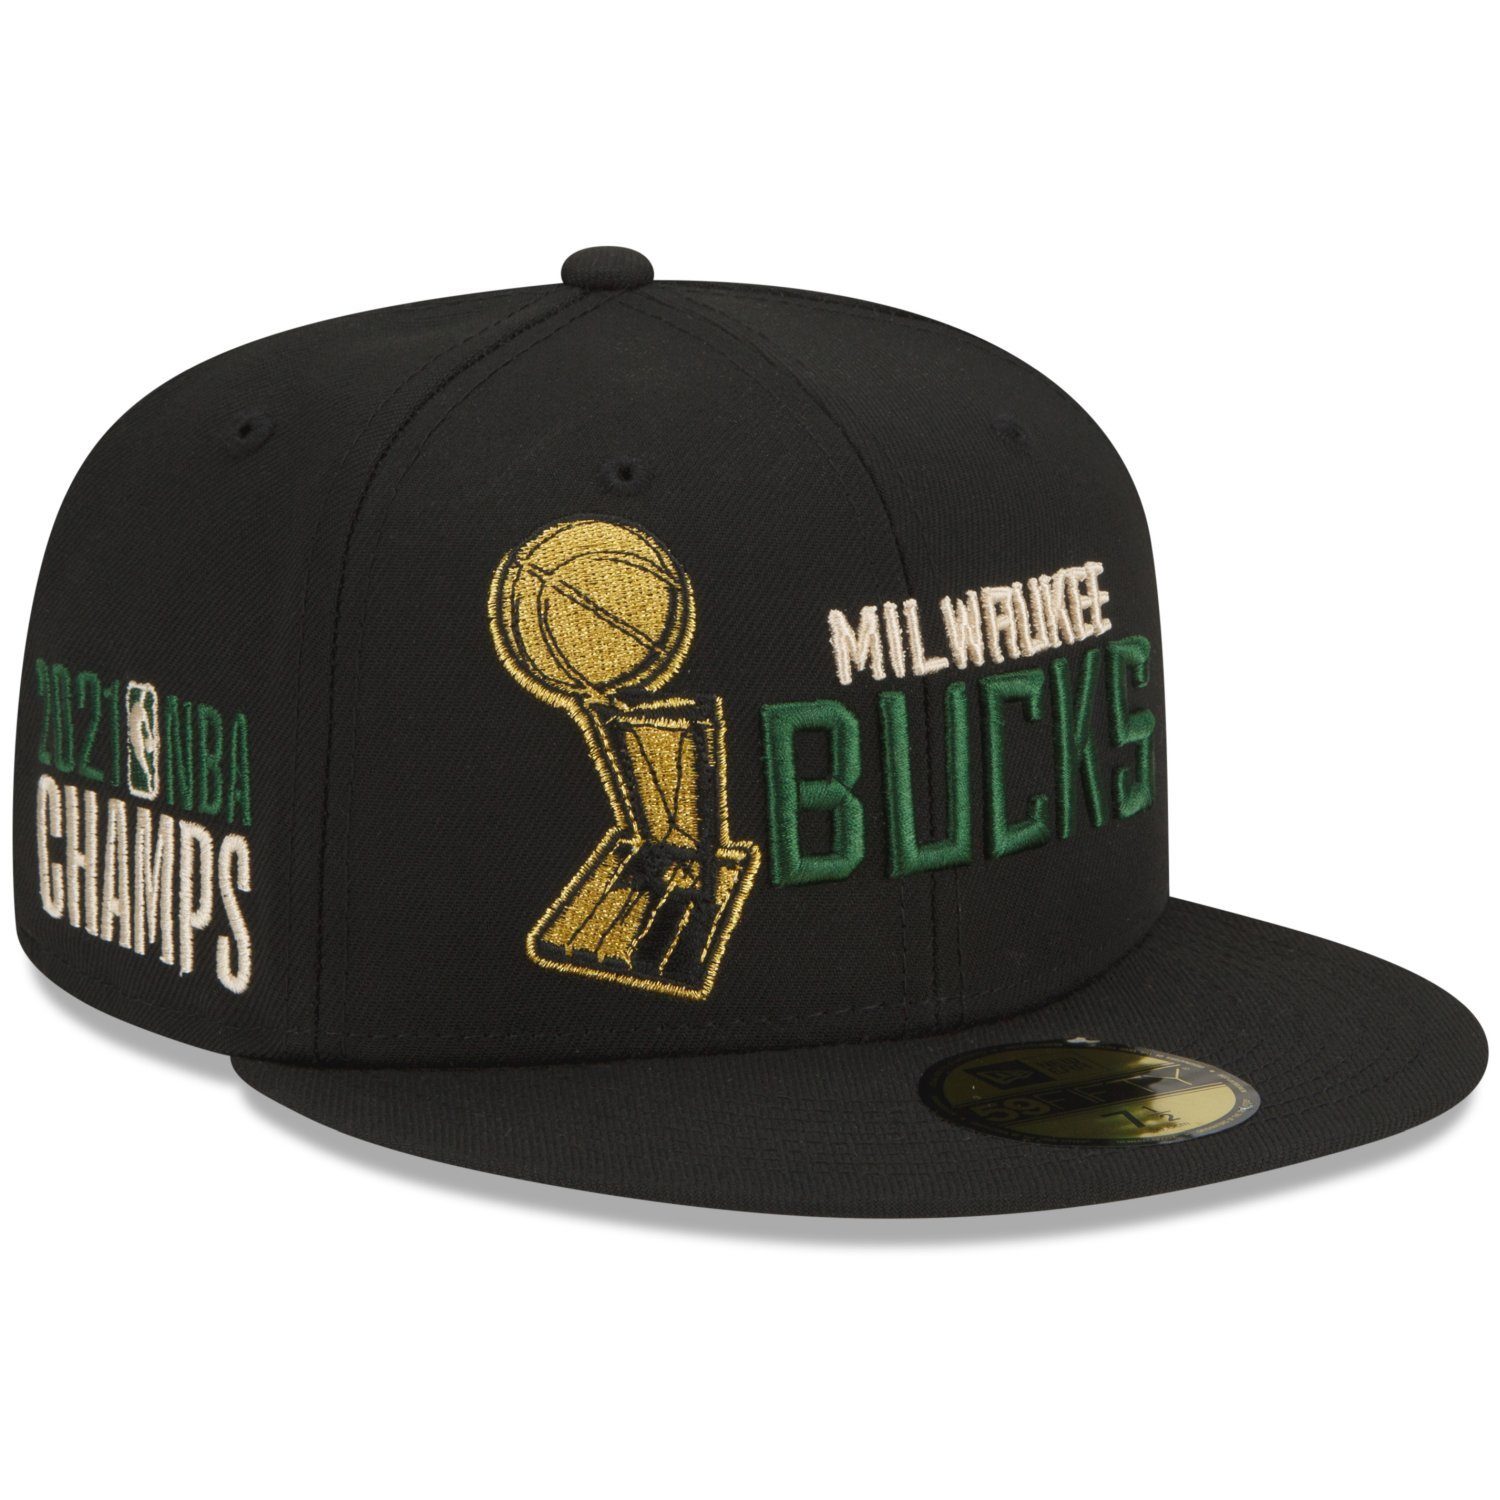 New Era Fitted Cap 59Fifty NBA CHAMPIONS Milwaukee Bucks schwarz